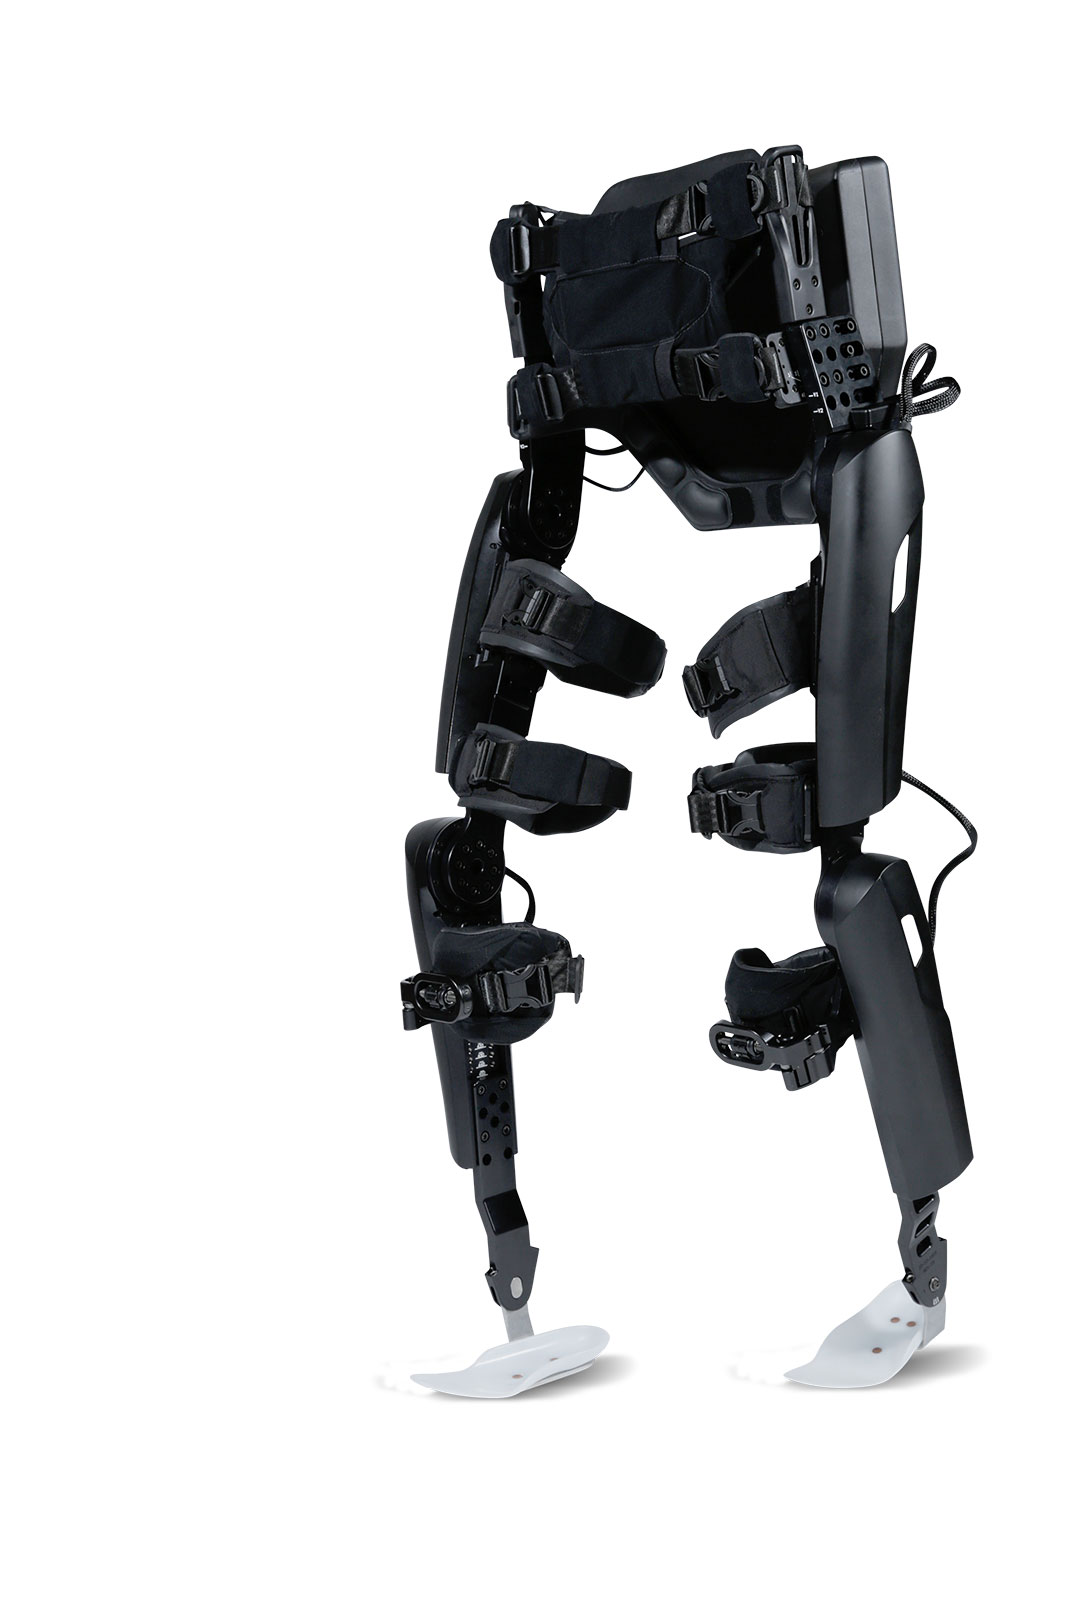 ReWalk-Robotics-Walker-Personal-6.0-Exoskelett